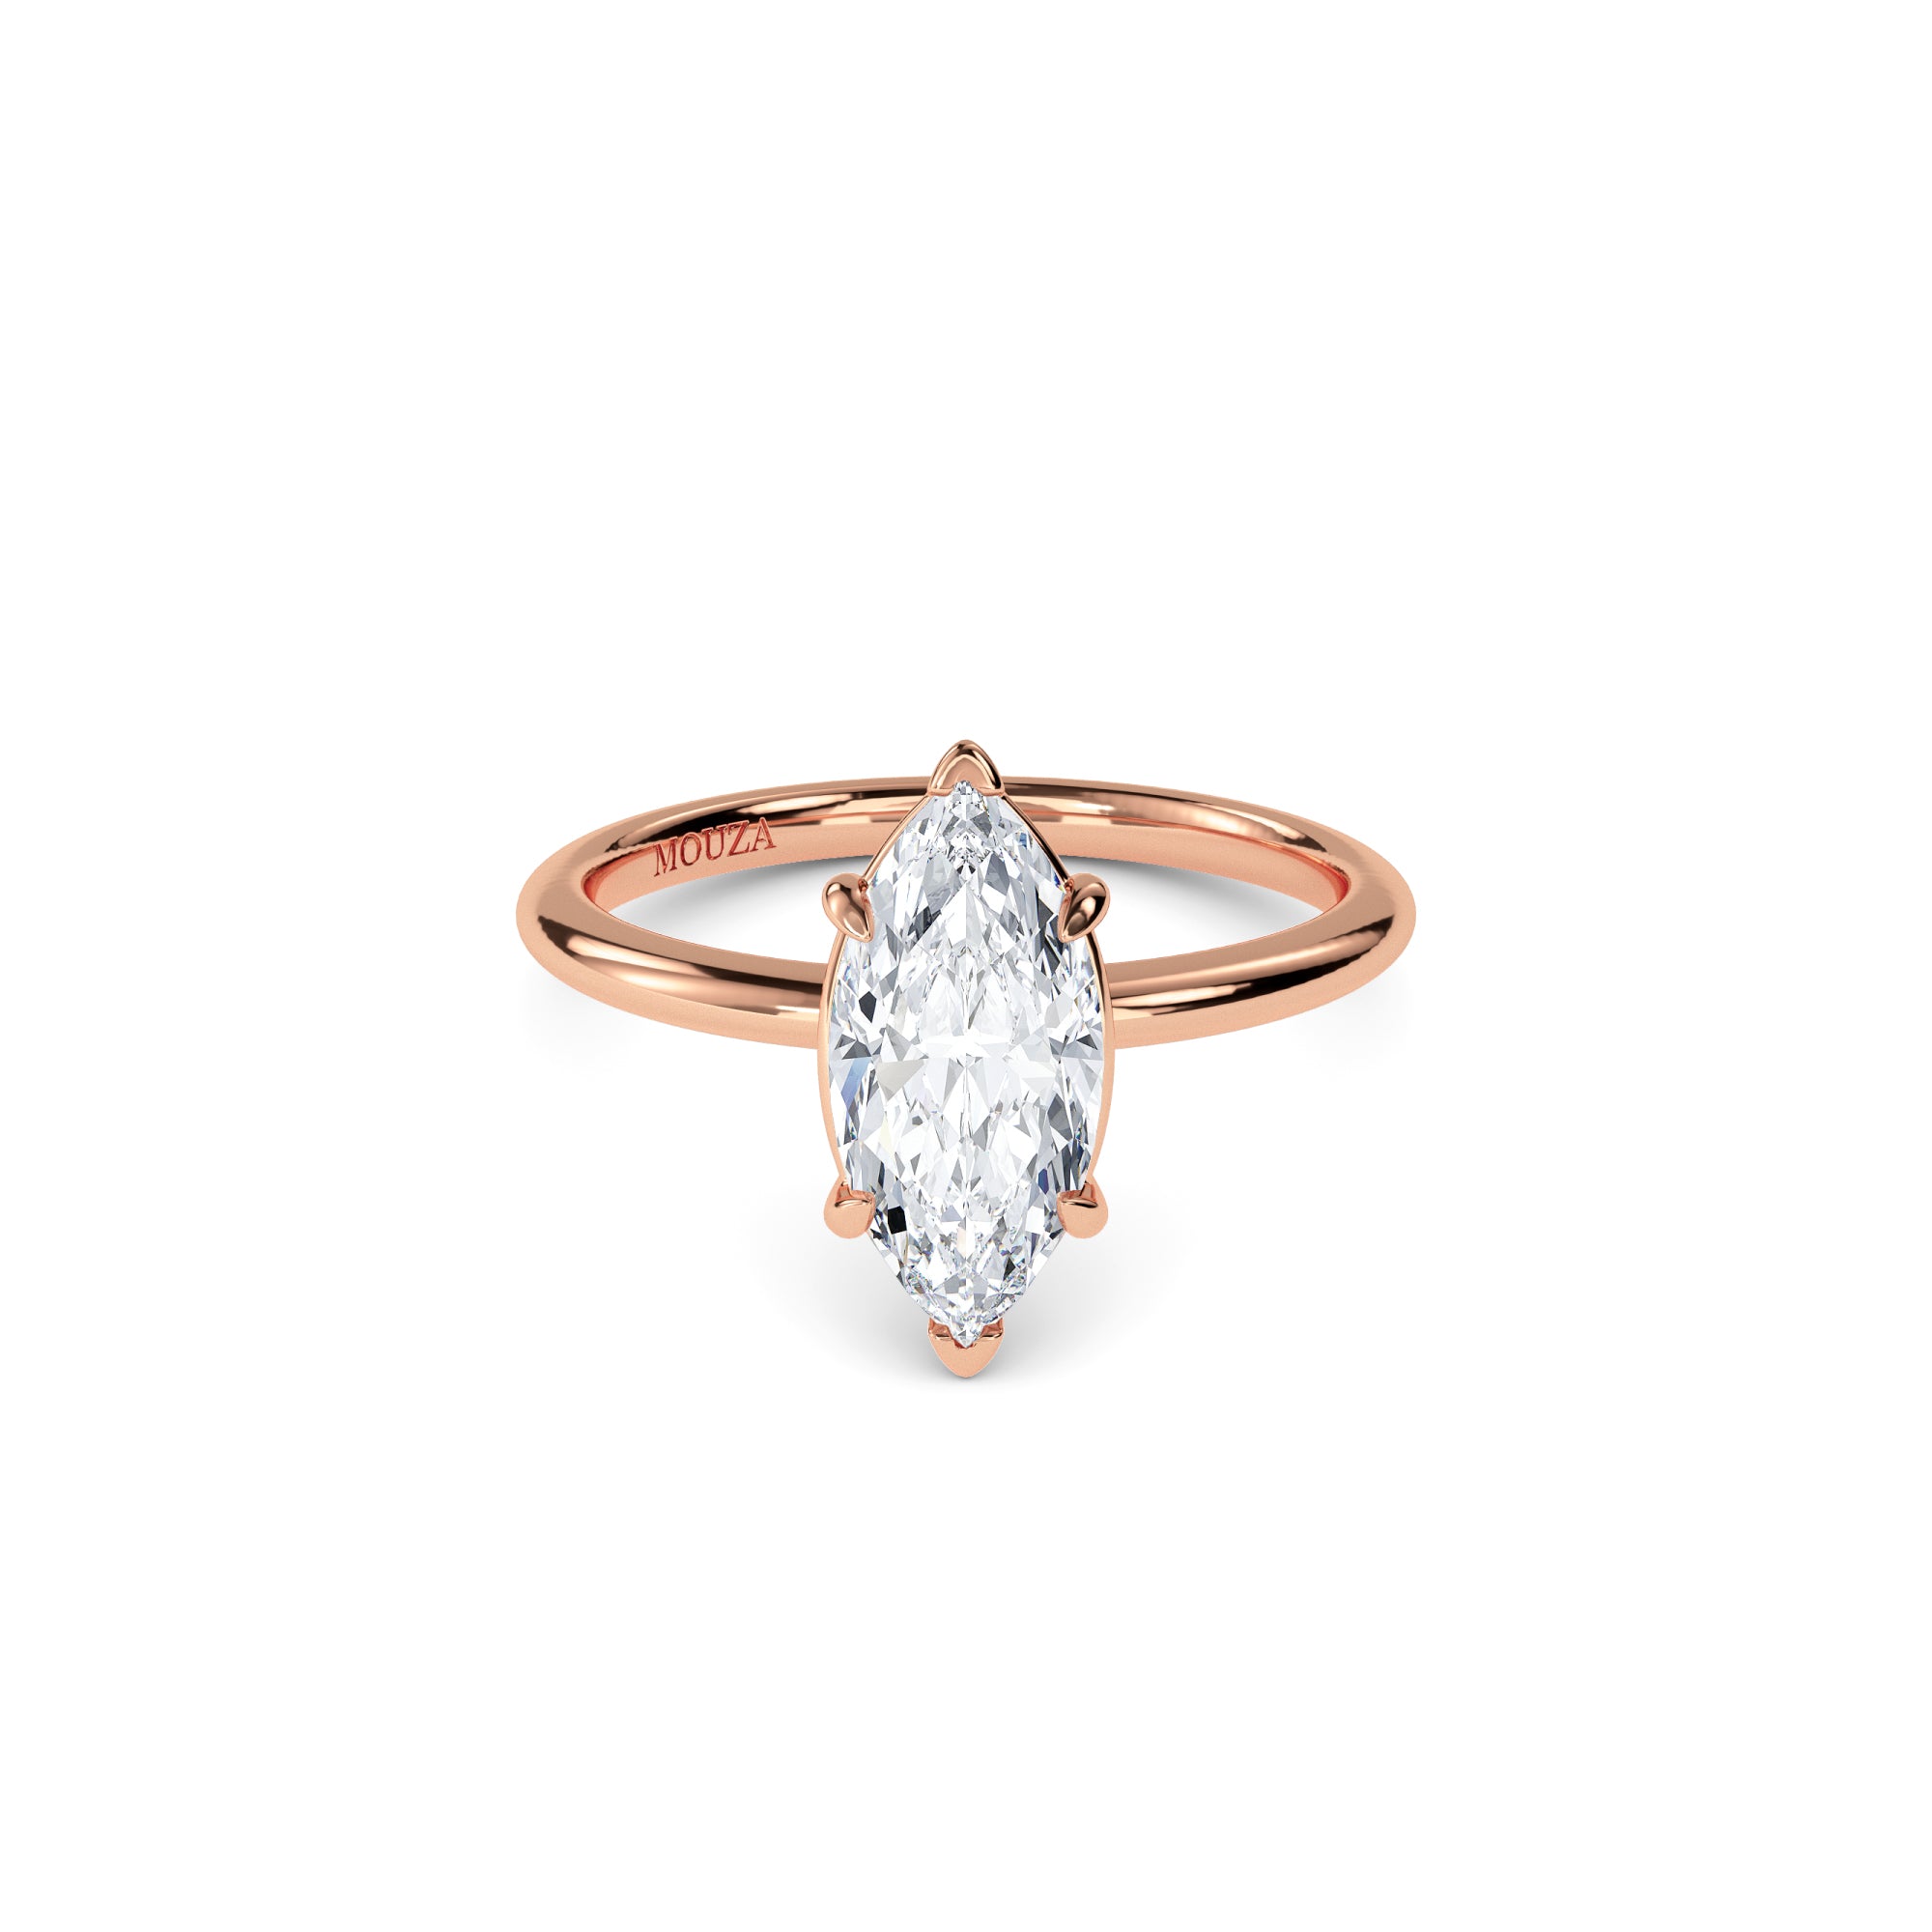 1.70 Carat Marquise Lab Diamond - Hatton Garden Engagement Ring